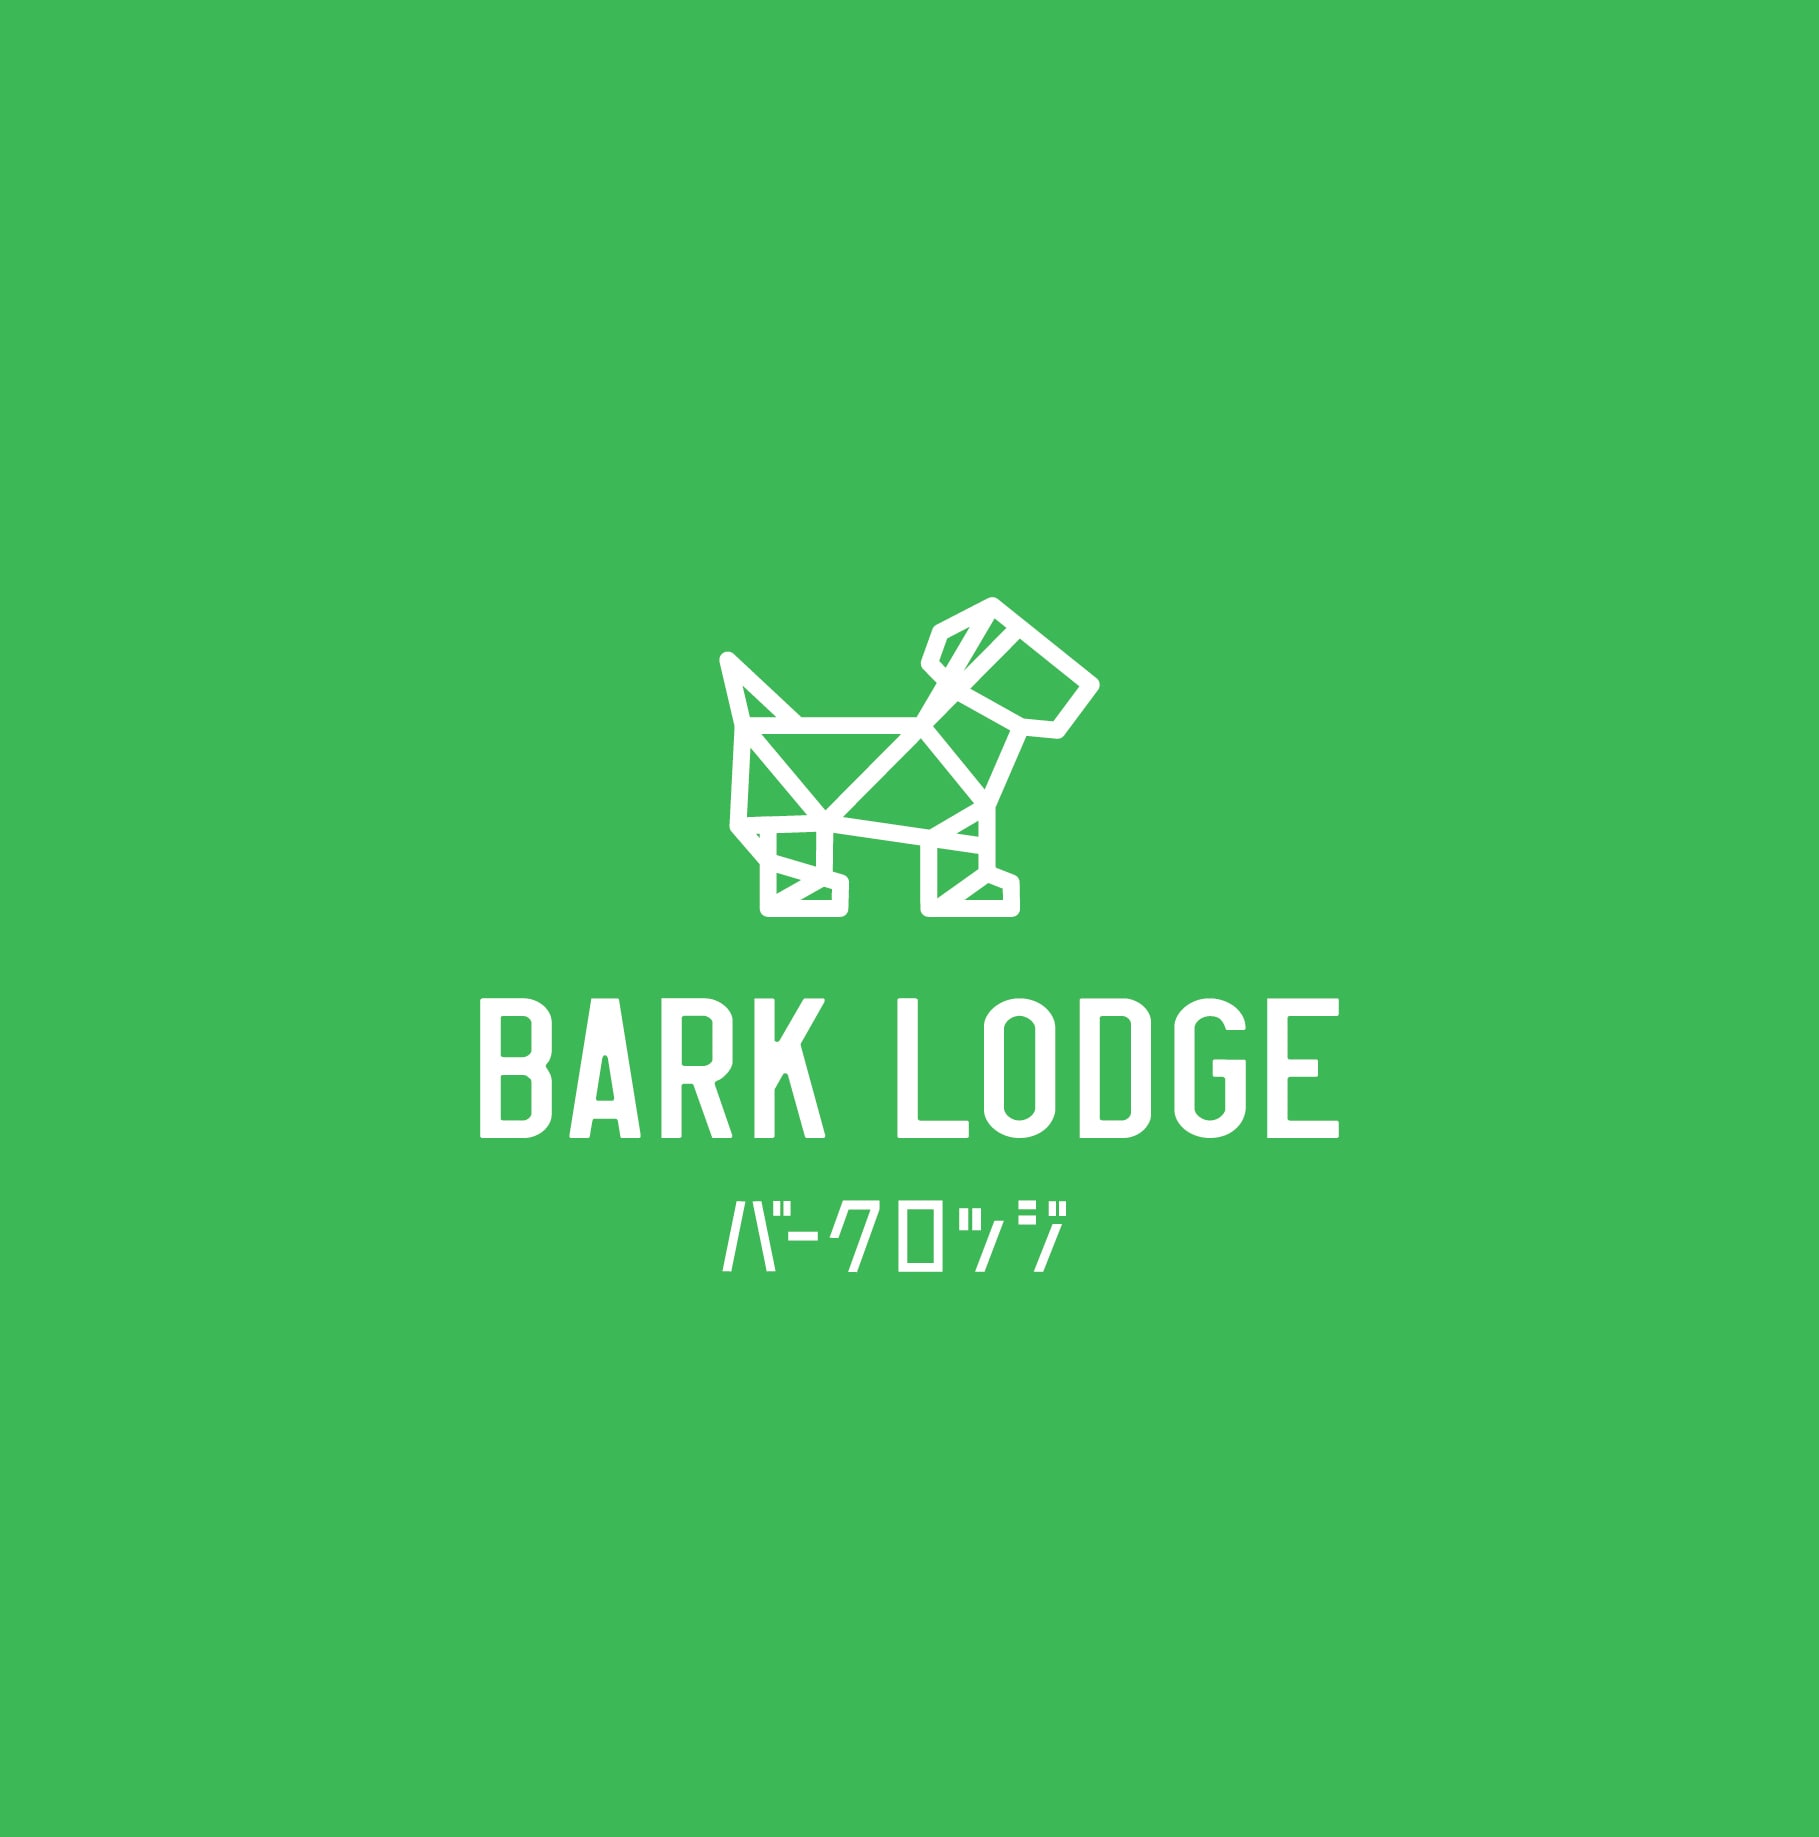 BARK LODGE(버클로지)